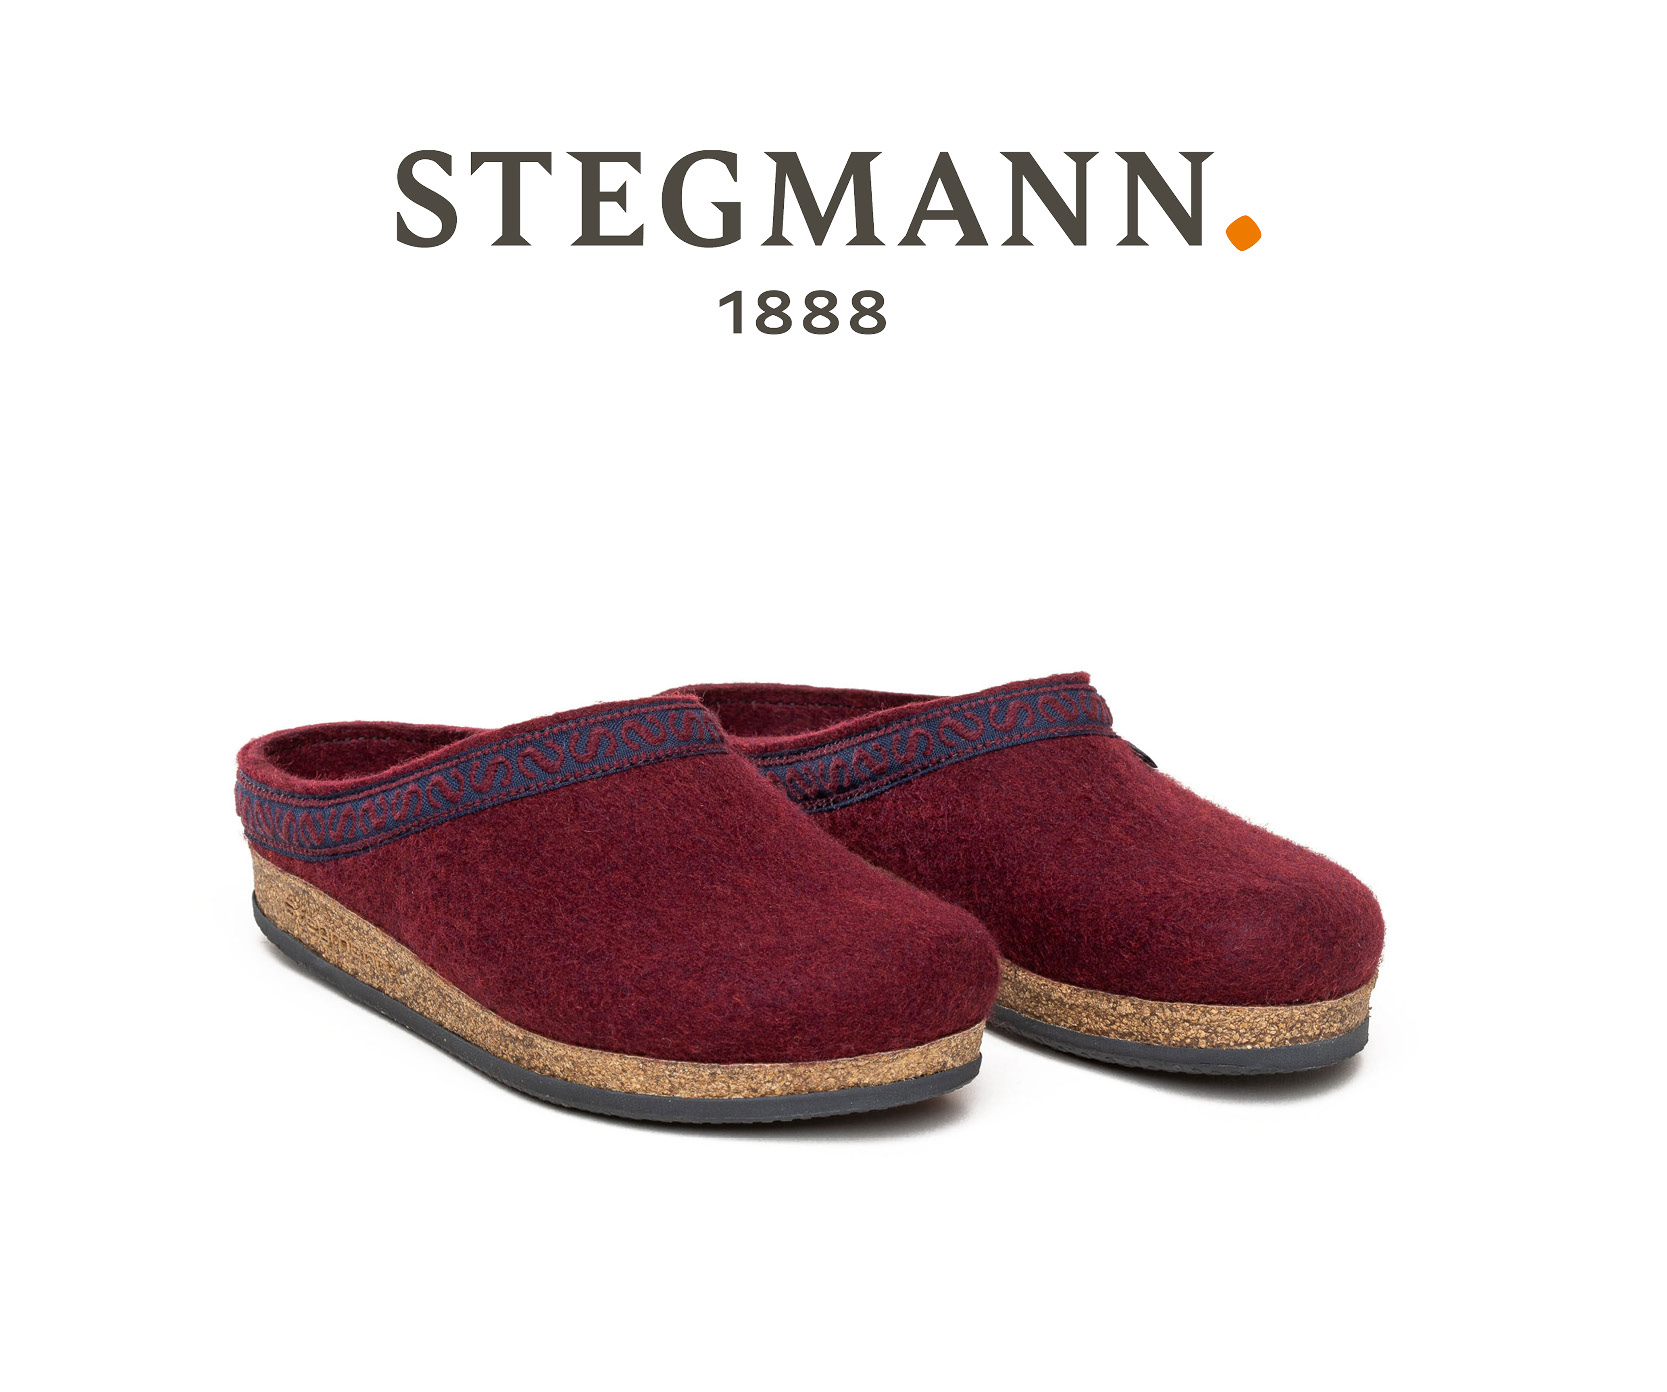 Stegmann Brand Teaser